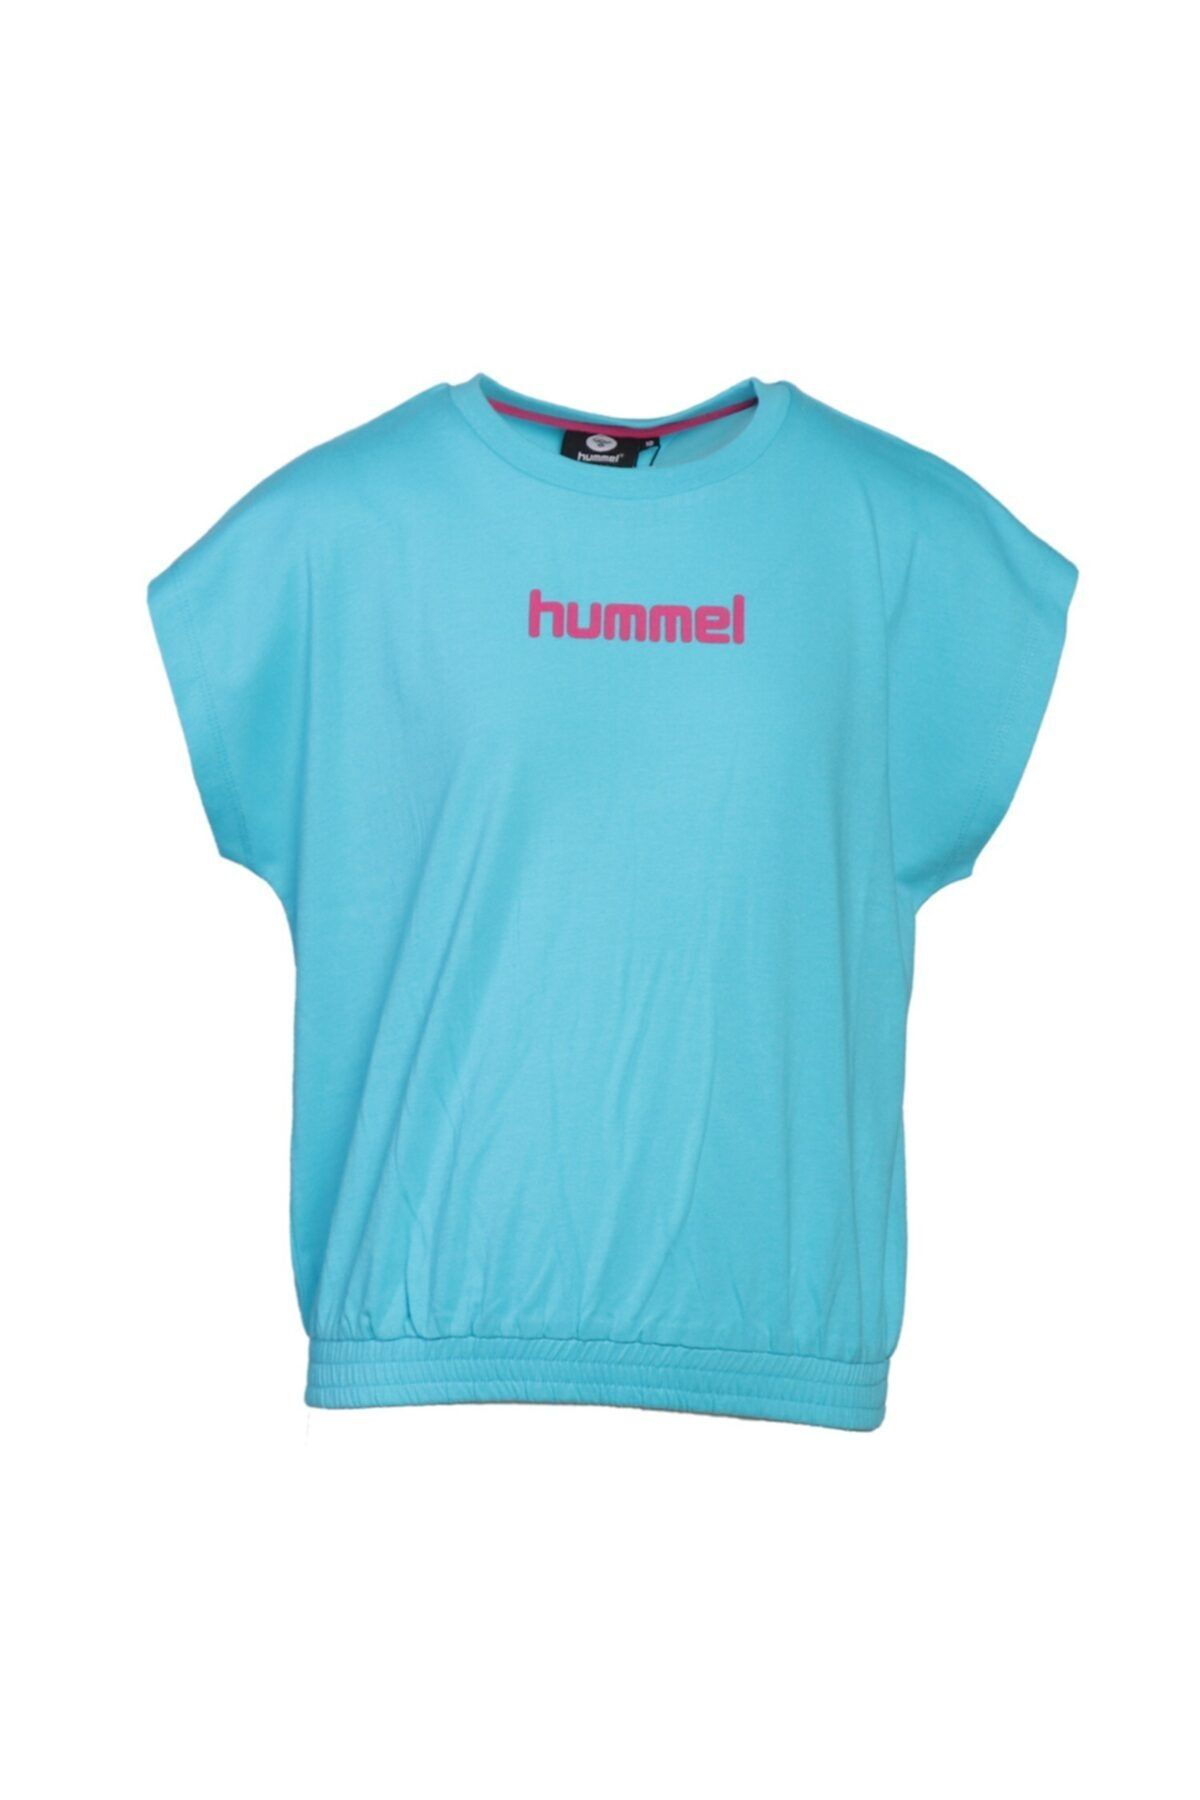 hummel HMLSOLITE Turkuaz Kız Çocuk T-Shirt 101085865